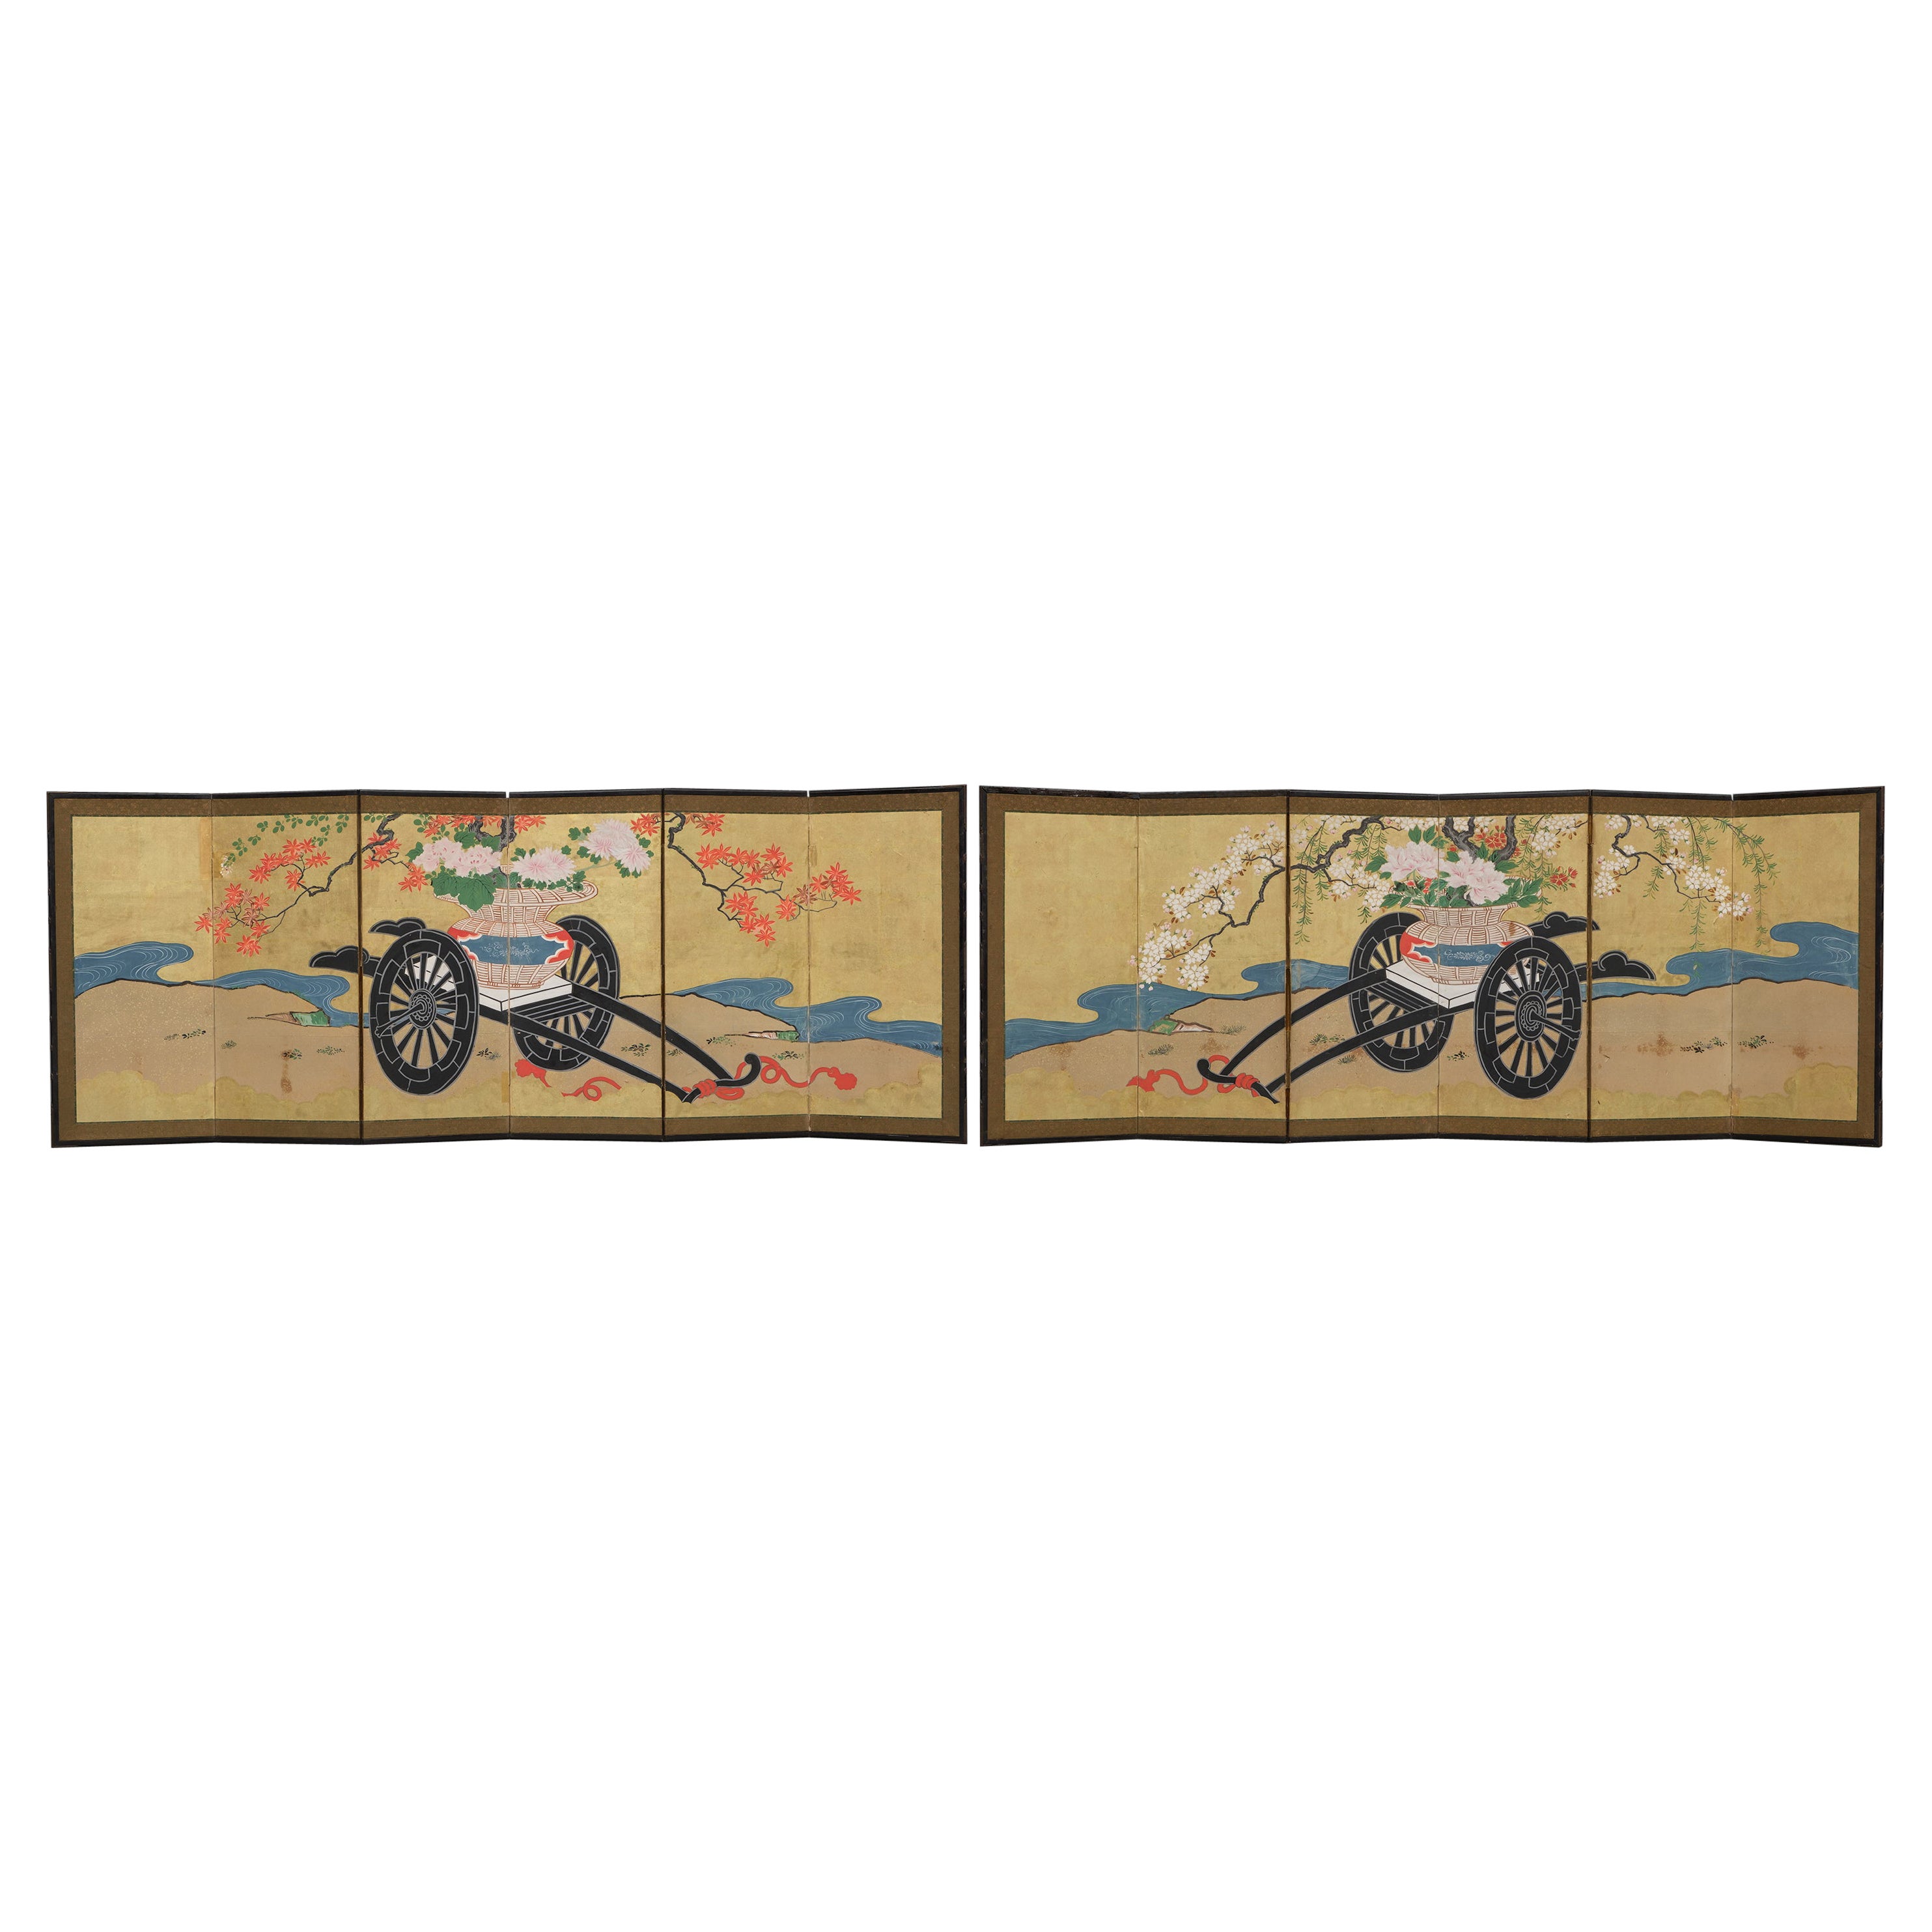 Pair of Japanese hinagata byôbu 雛形屏風 (small folding screens) with flower carts